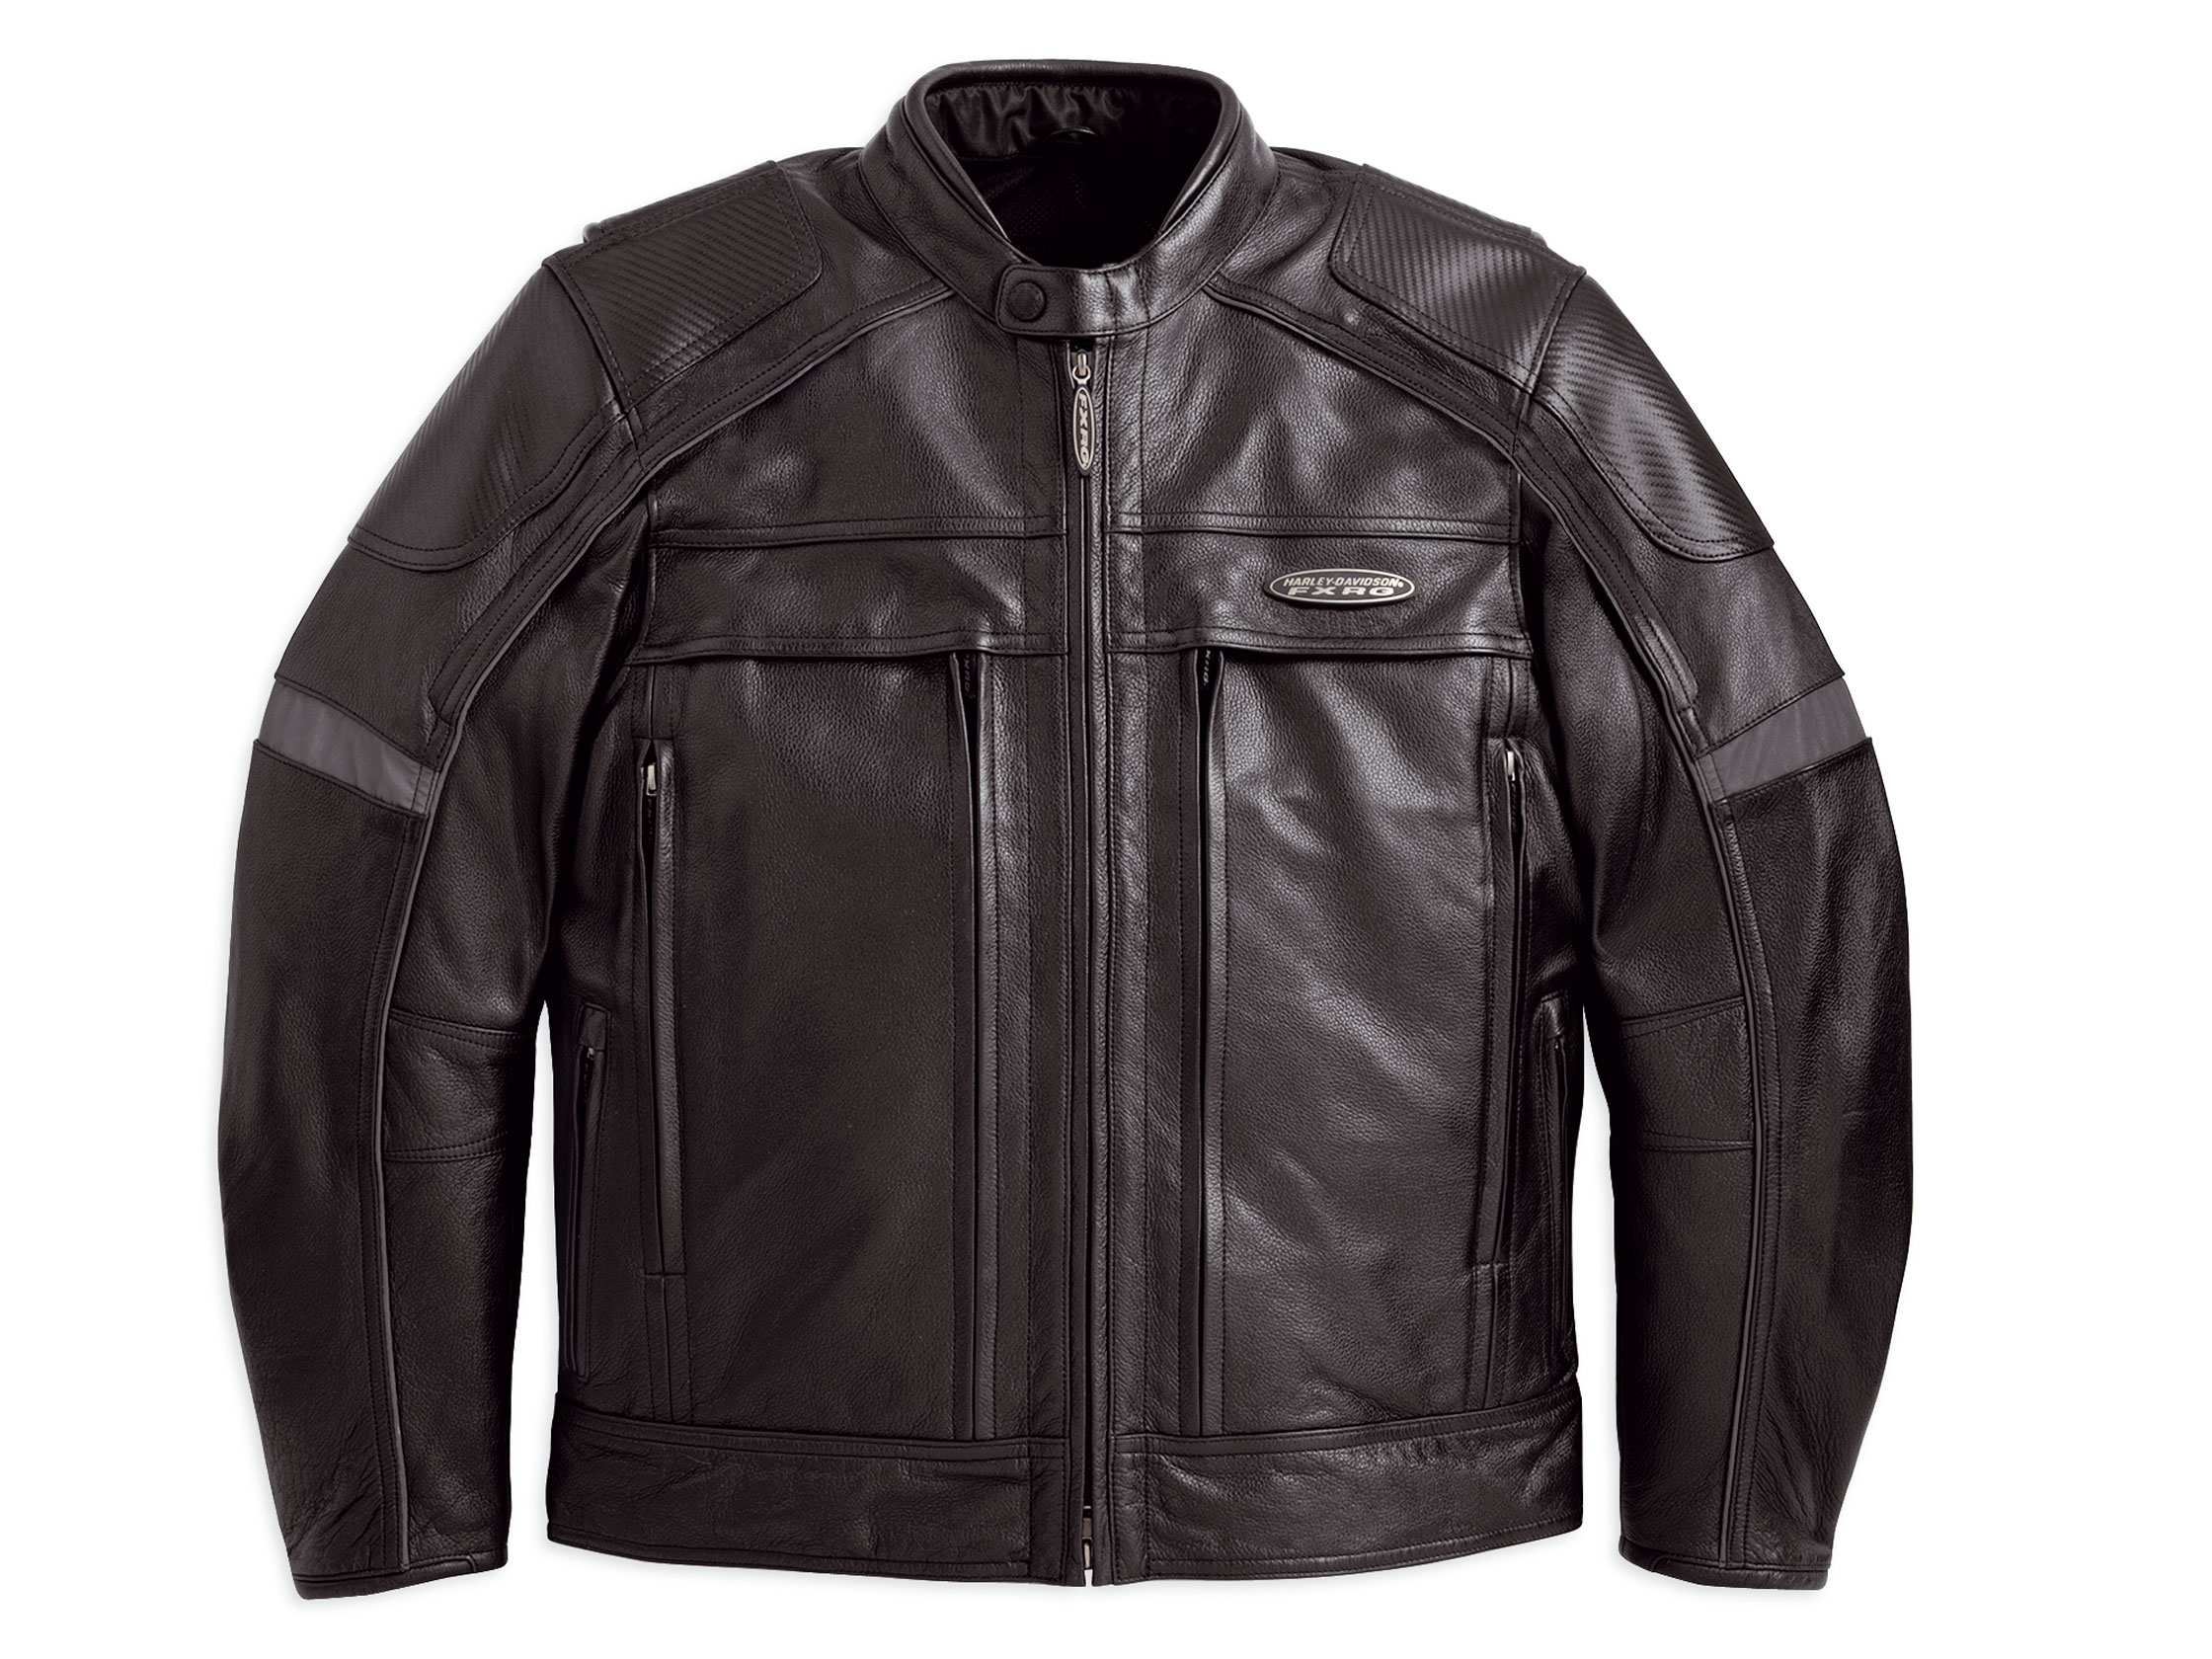 Harley Davidson FXRG Motorcycle Leather Jacket Waterproof No Liner